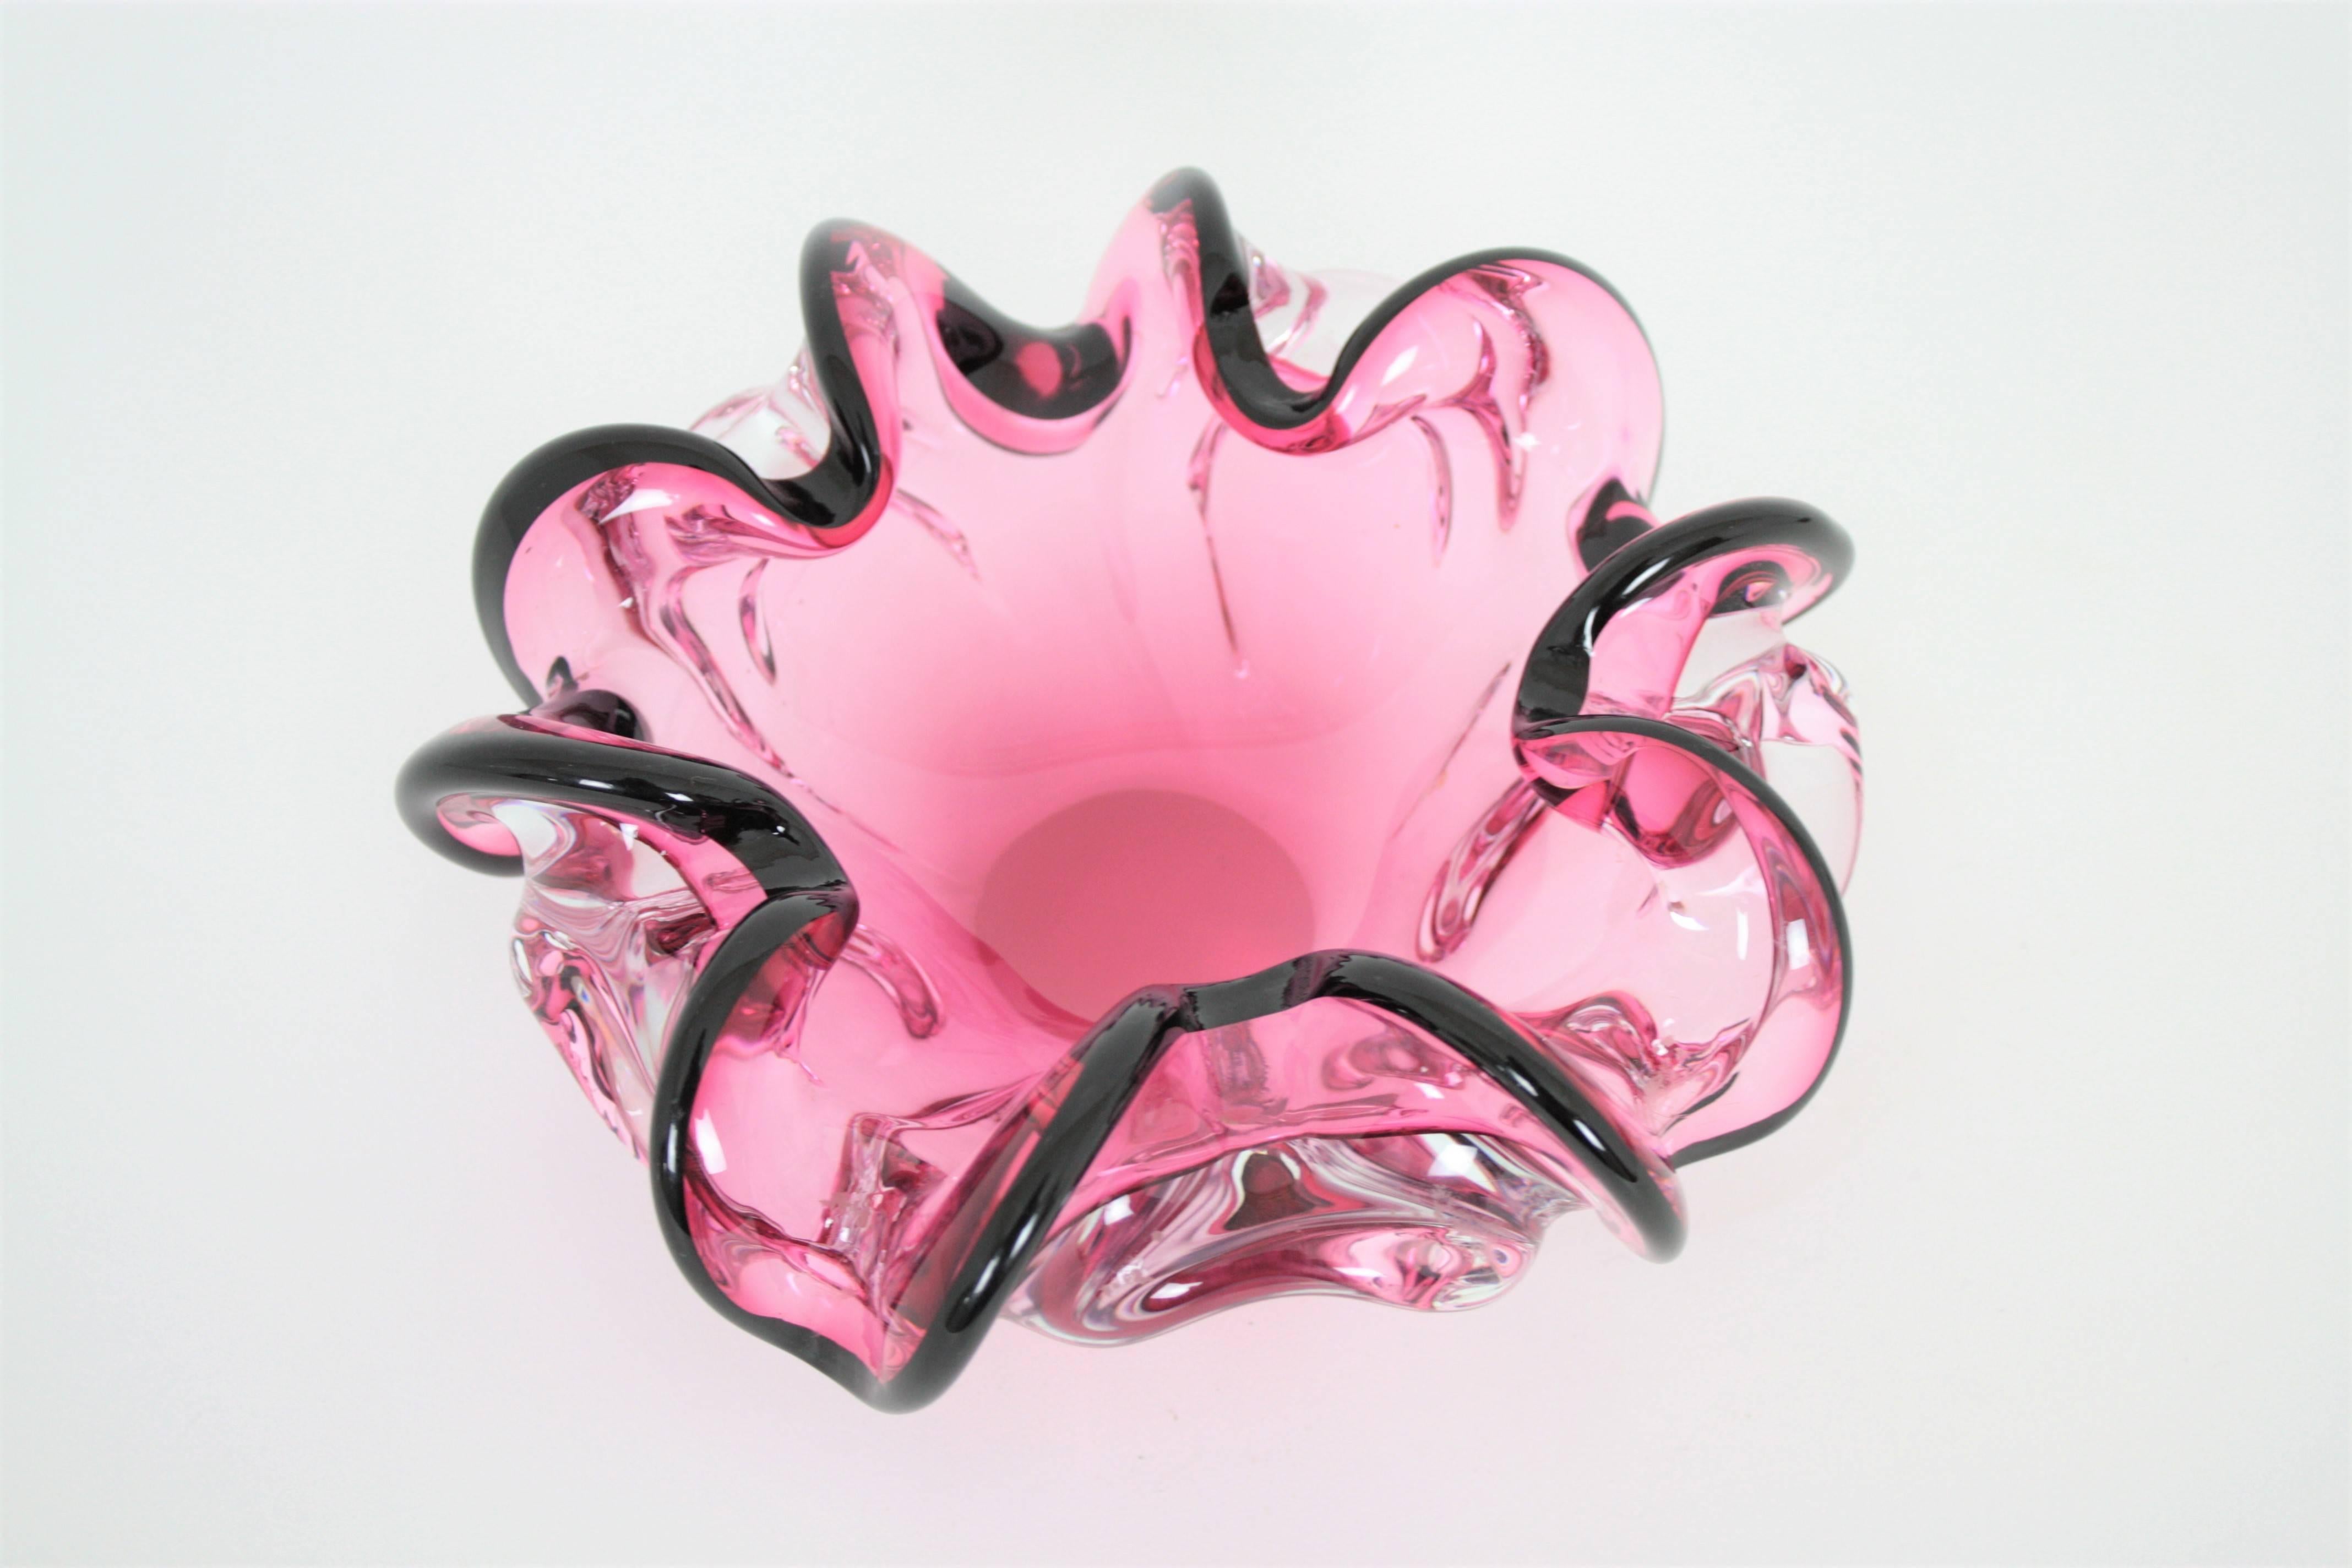 Giant Handblown Pink and Black Sommero Murano Art Glass Flower Bowl 2